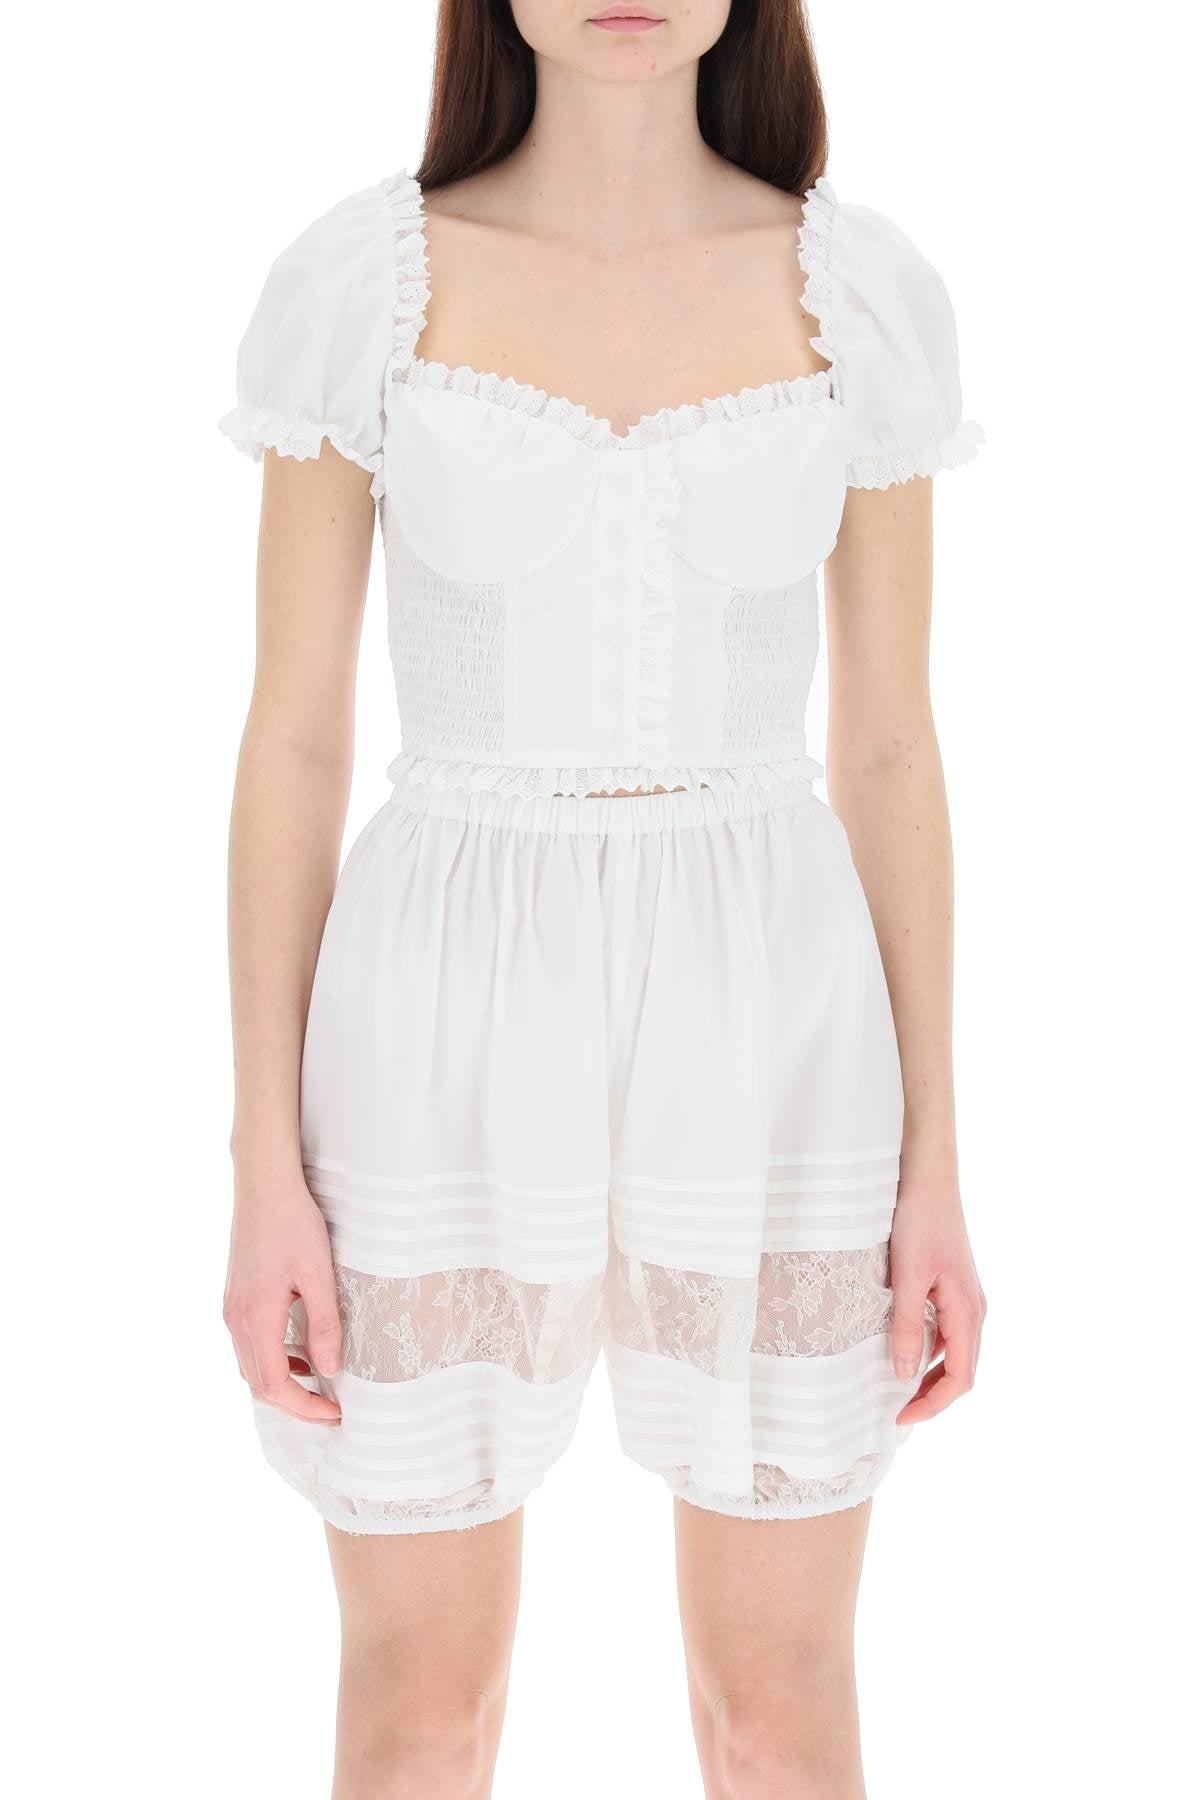 Dolce & Gabbana Cotton Poplin Cropped Top in White | Lyst